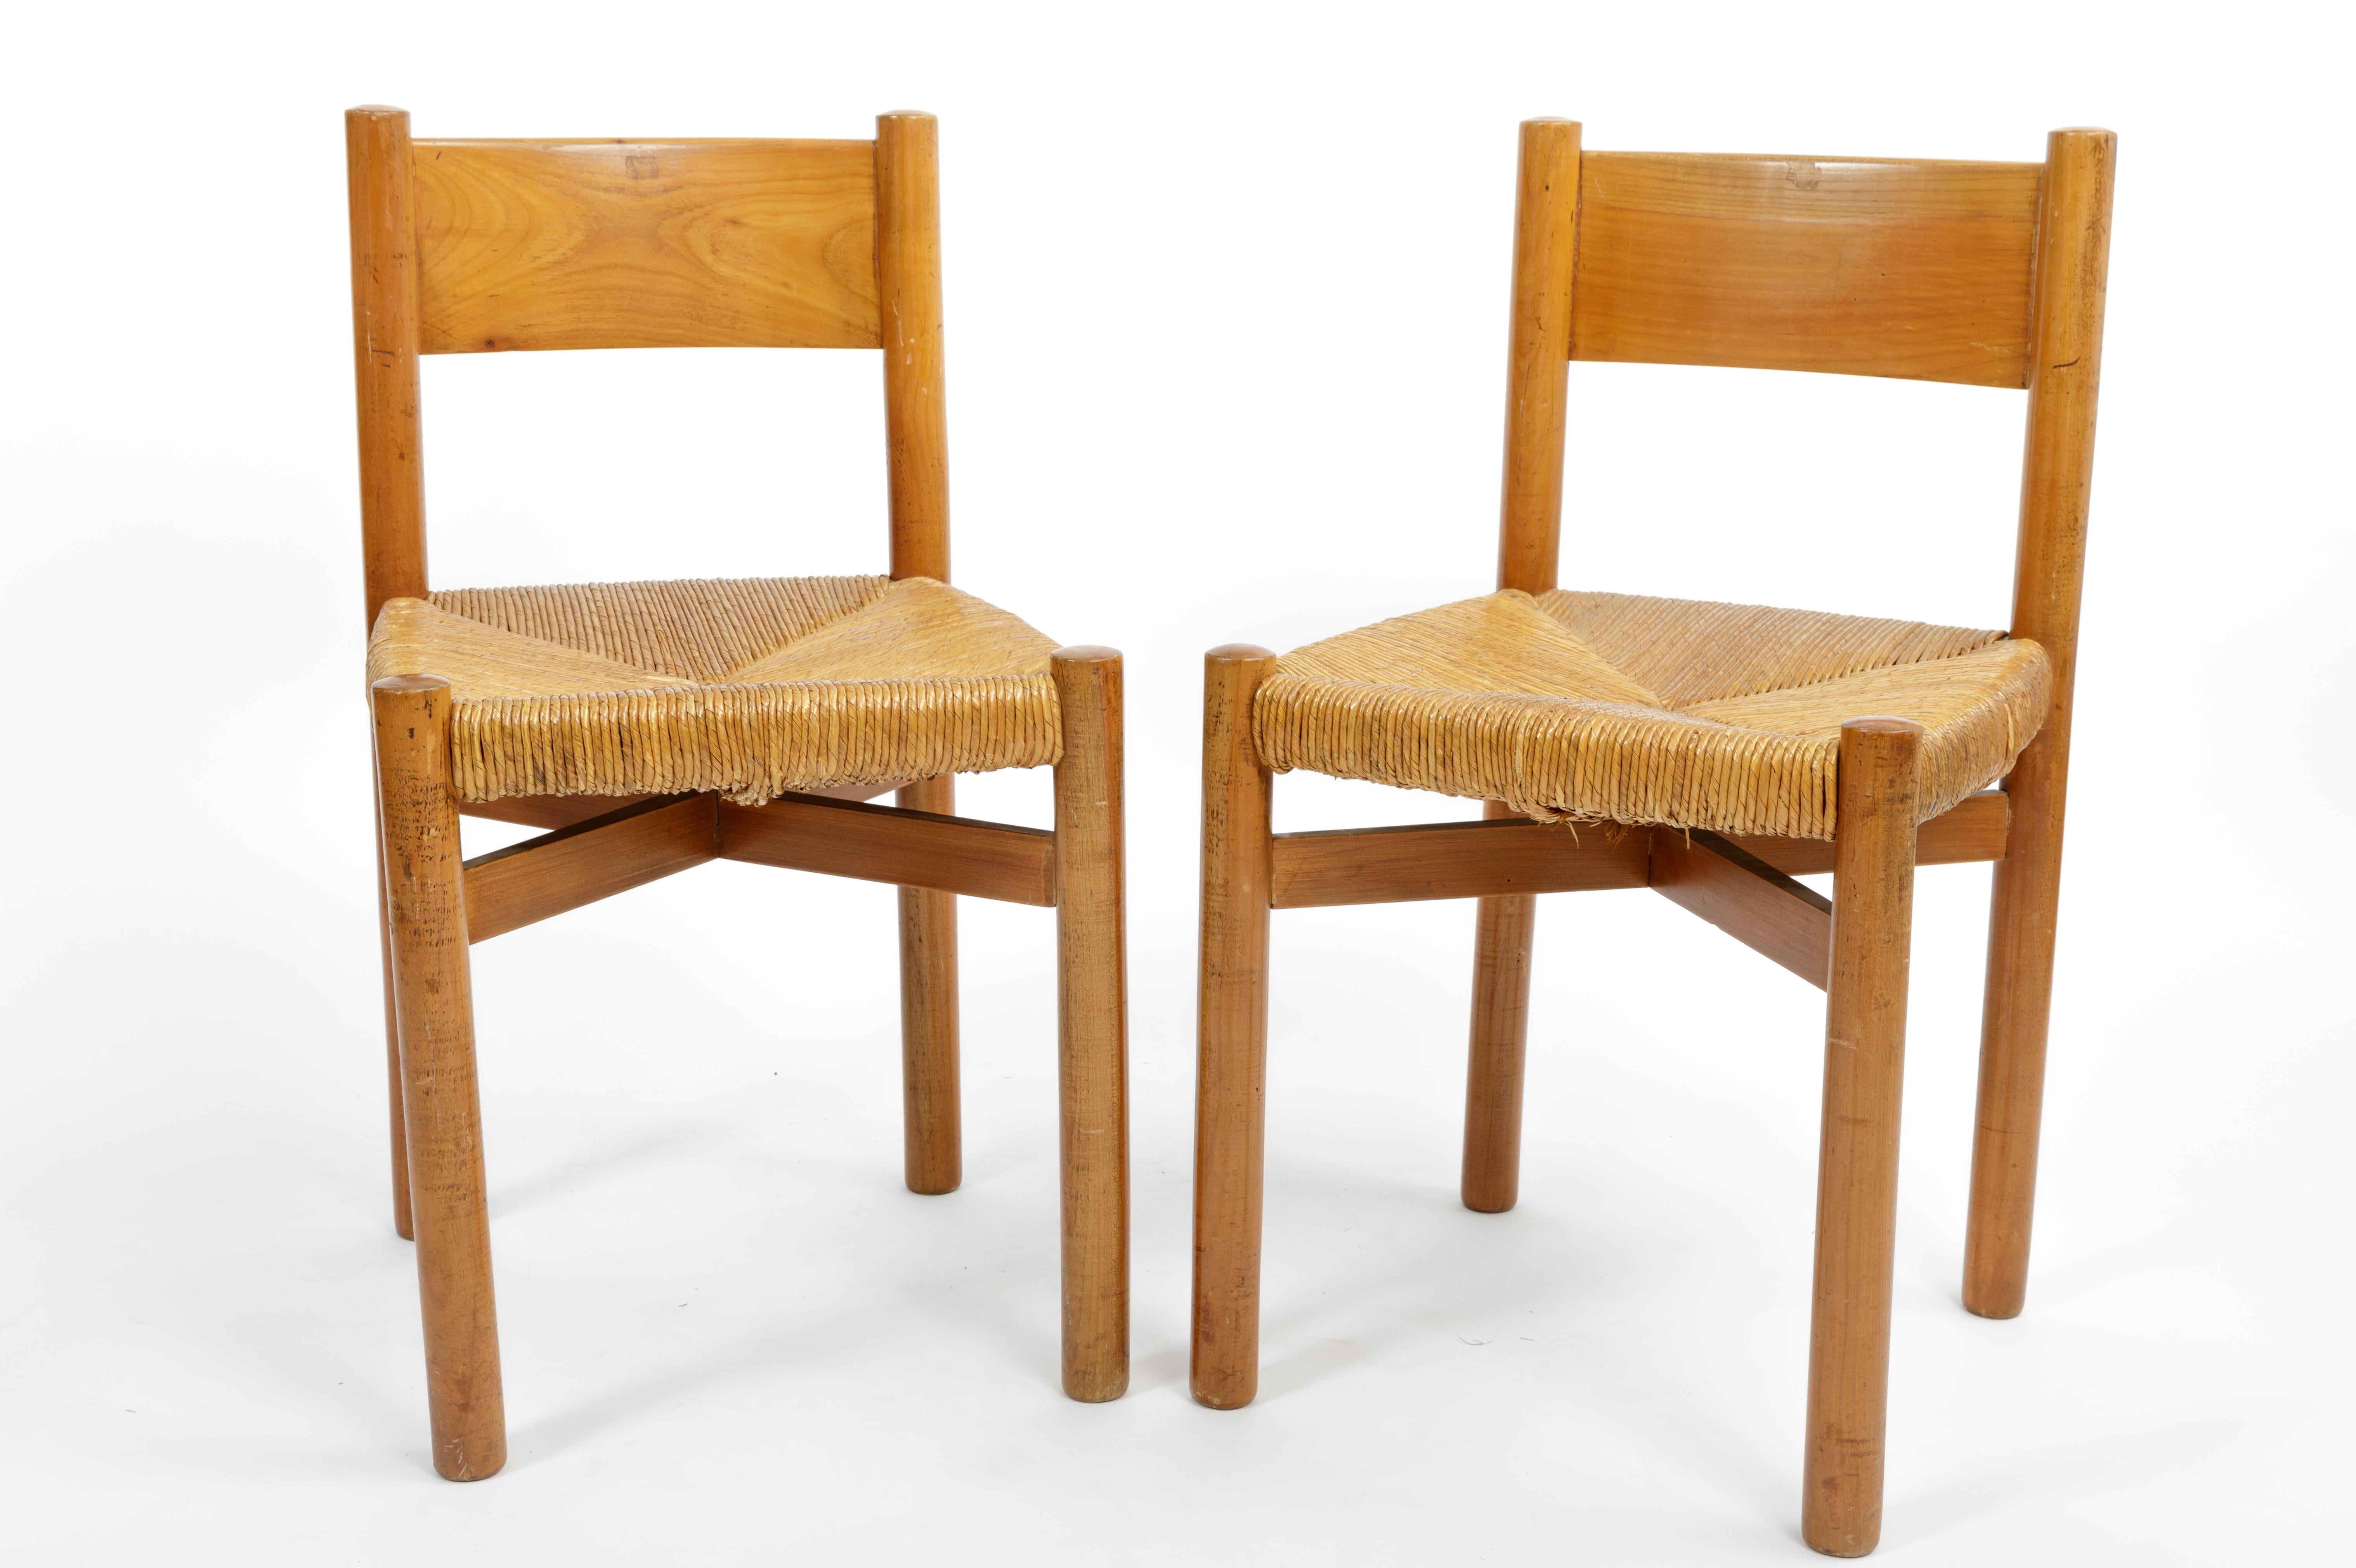 Wood Charlotte Perriand Rush Chairs, France, circa 1950s